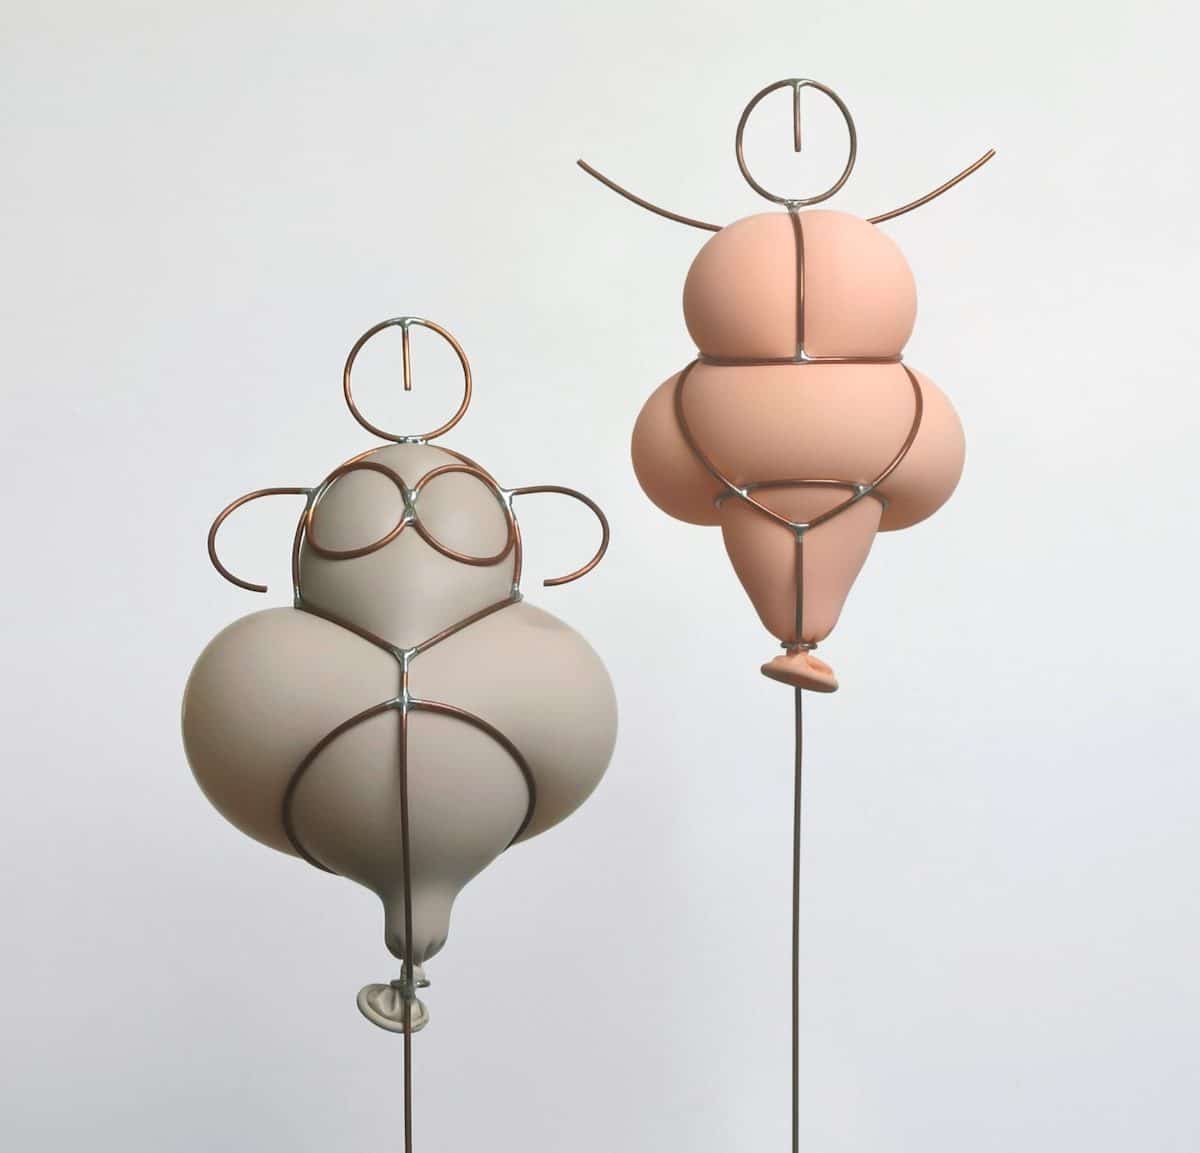 Balloon Sculptures by Reddish Studio Inspired by Venus Sculptures